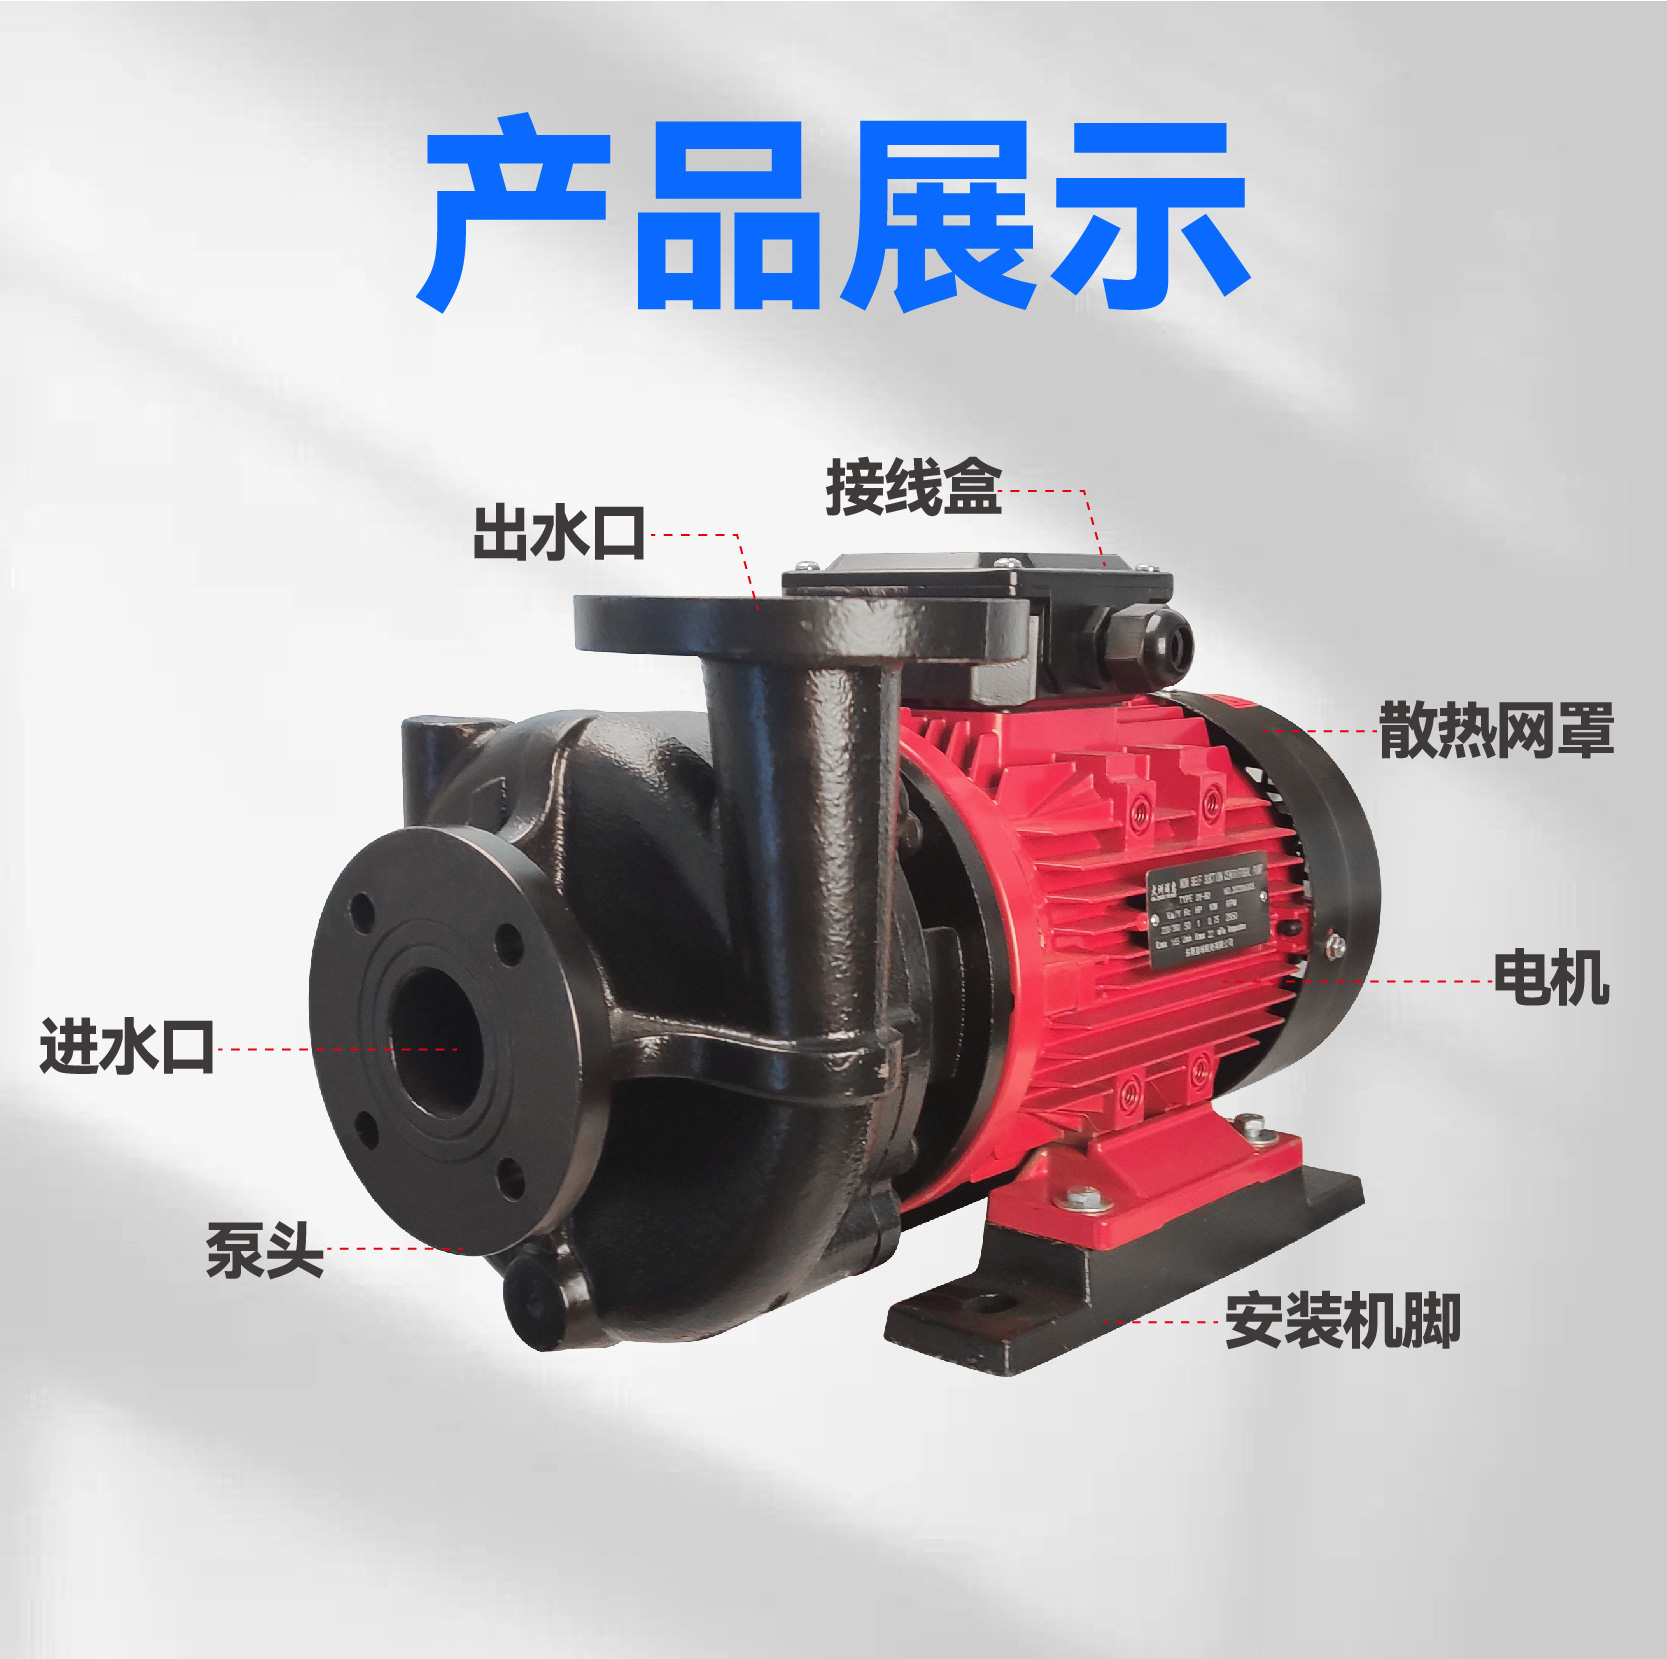 TS-63/71台湾高温油泵模温机热油循环泵耐高温280°C油泵导热油泵-图1